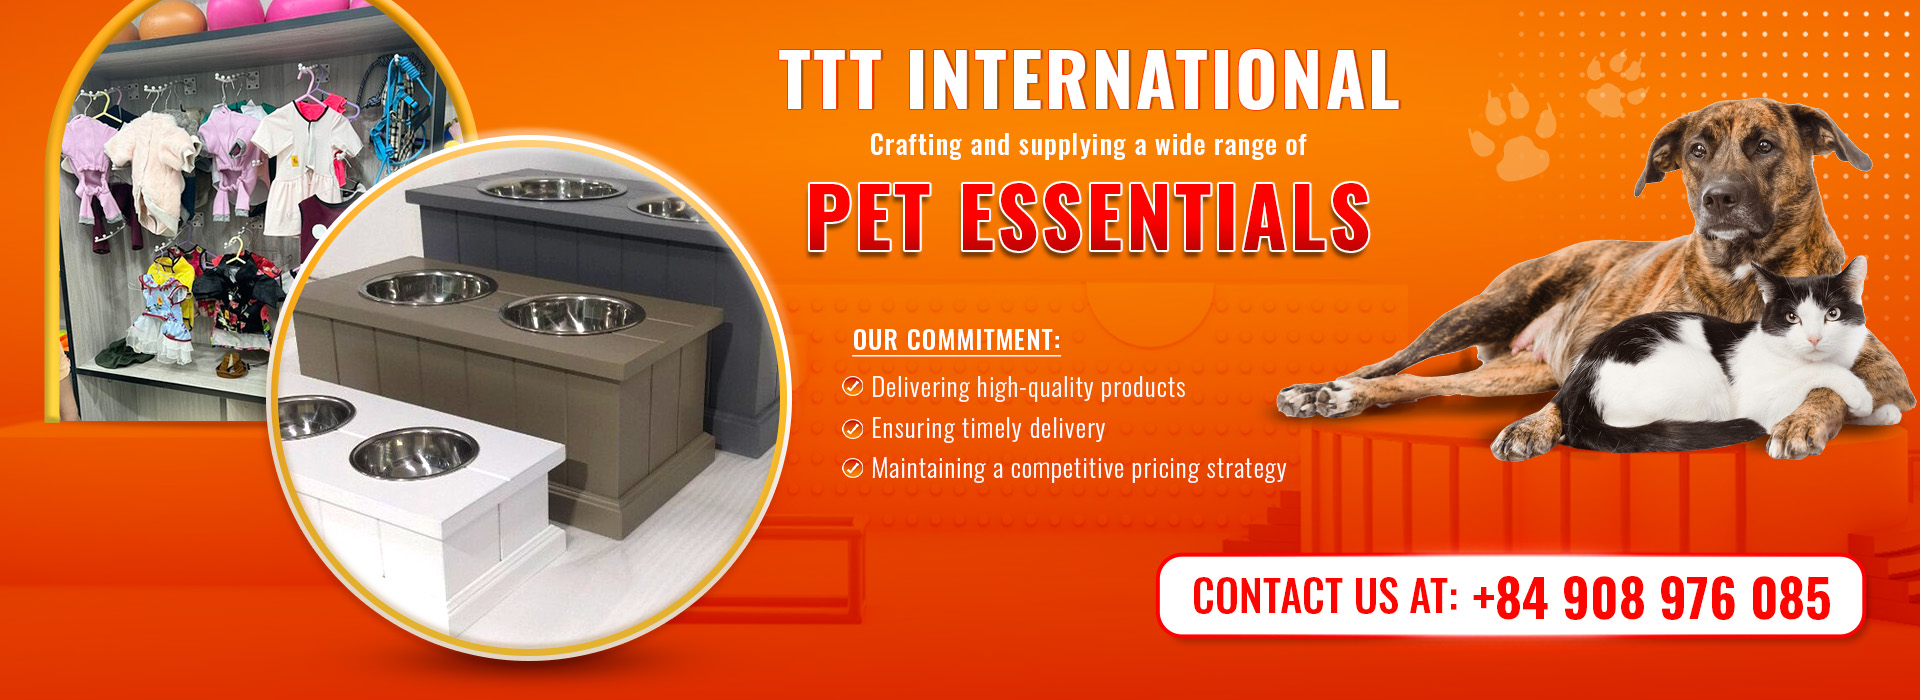 TTT INTERNATIONAL Company Limited